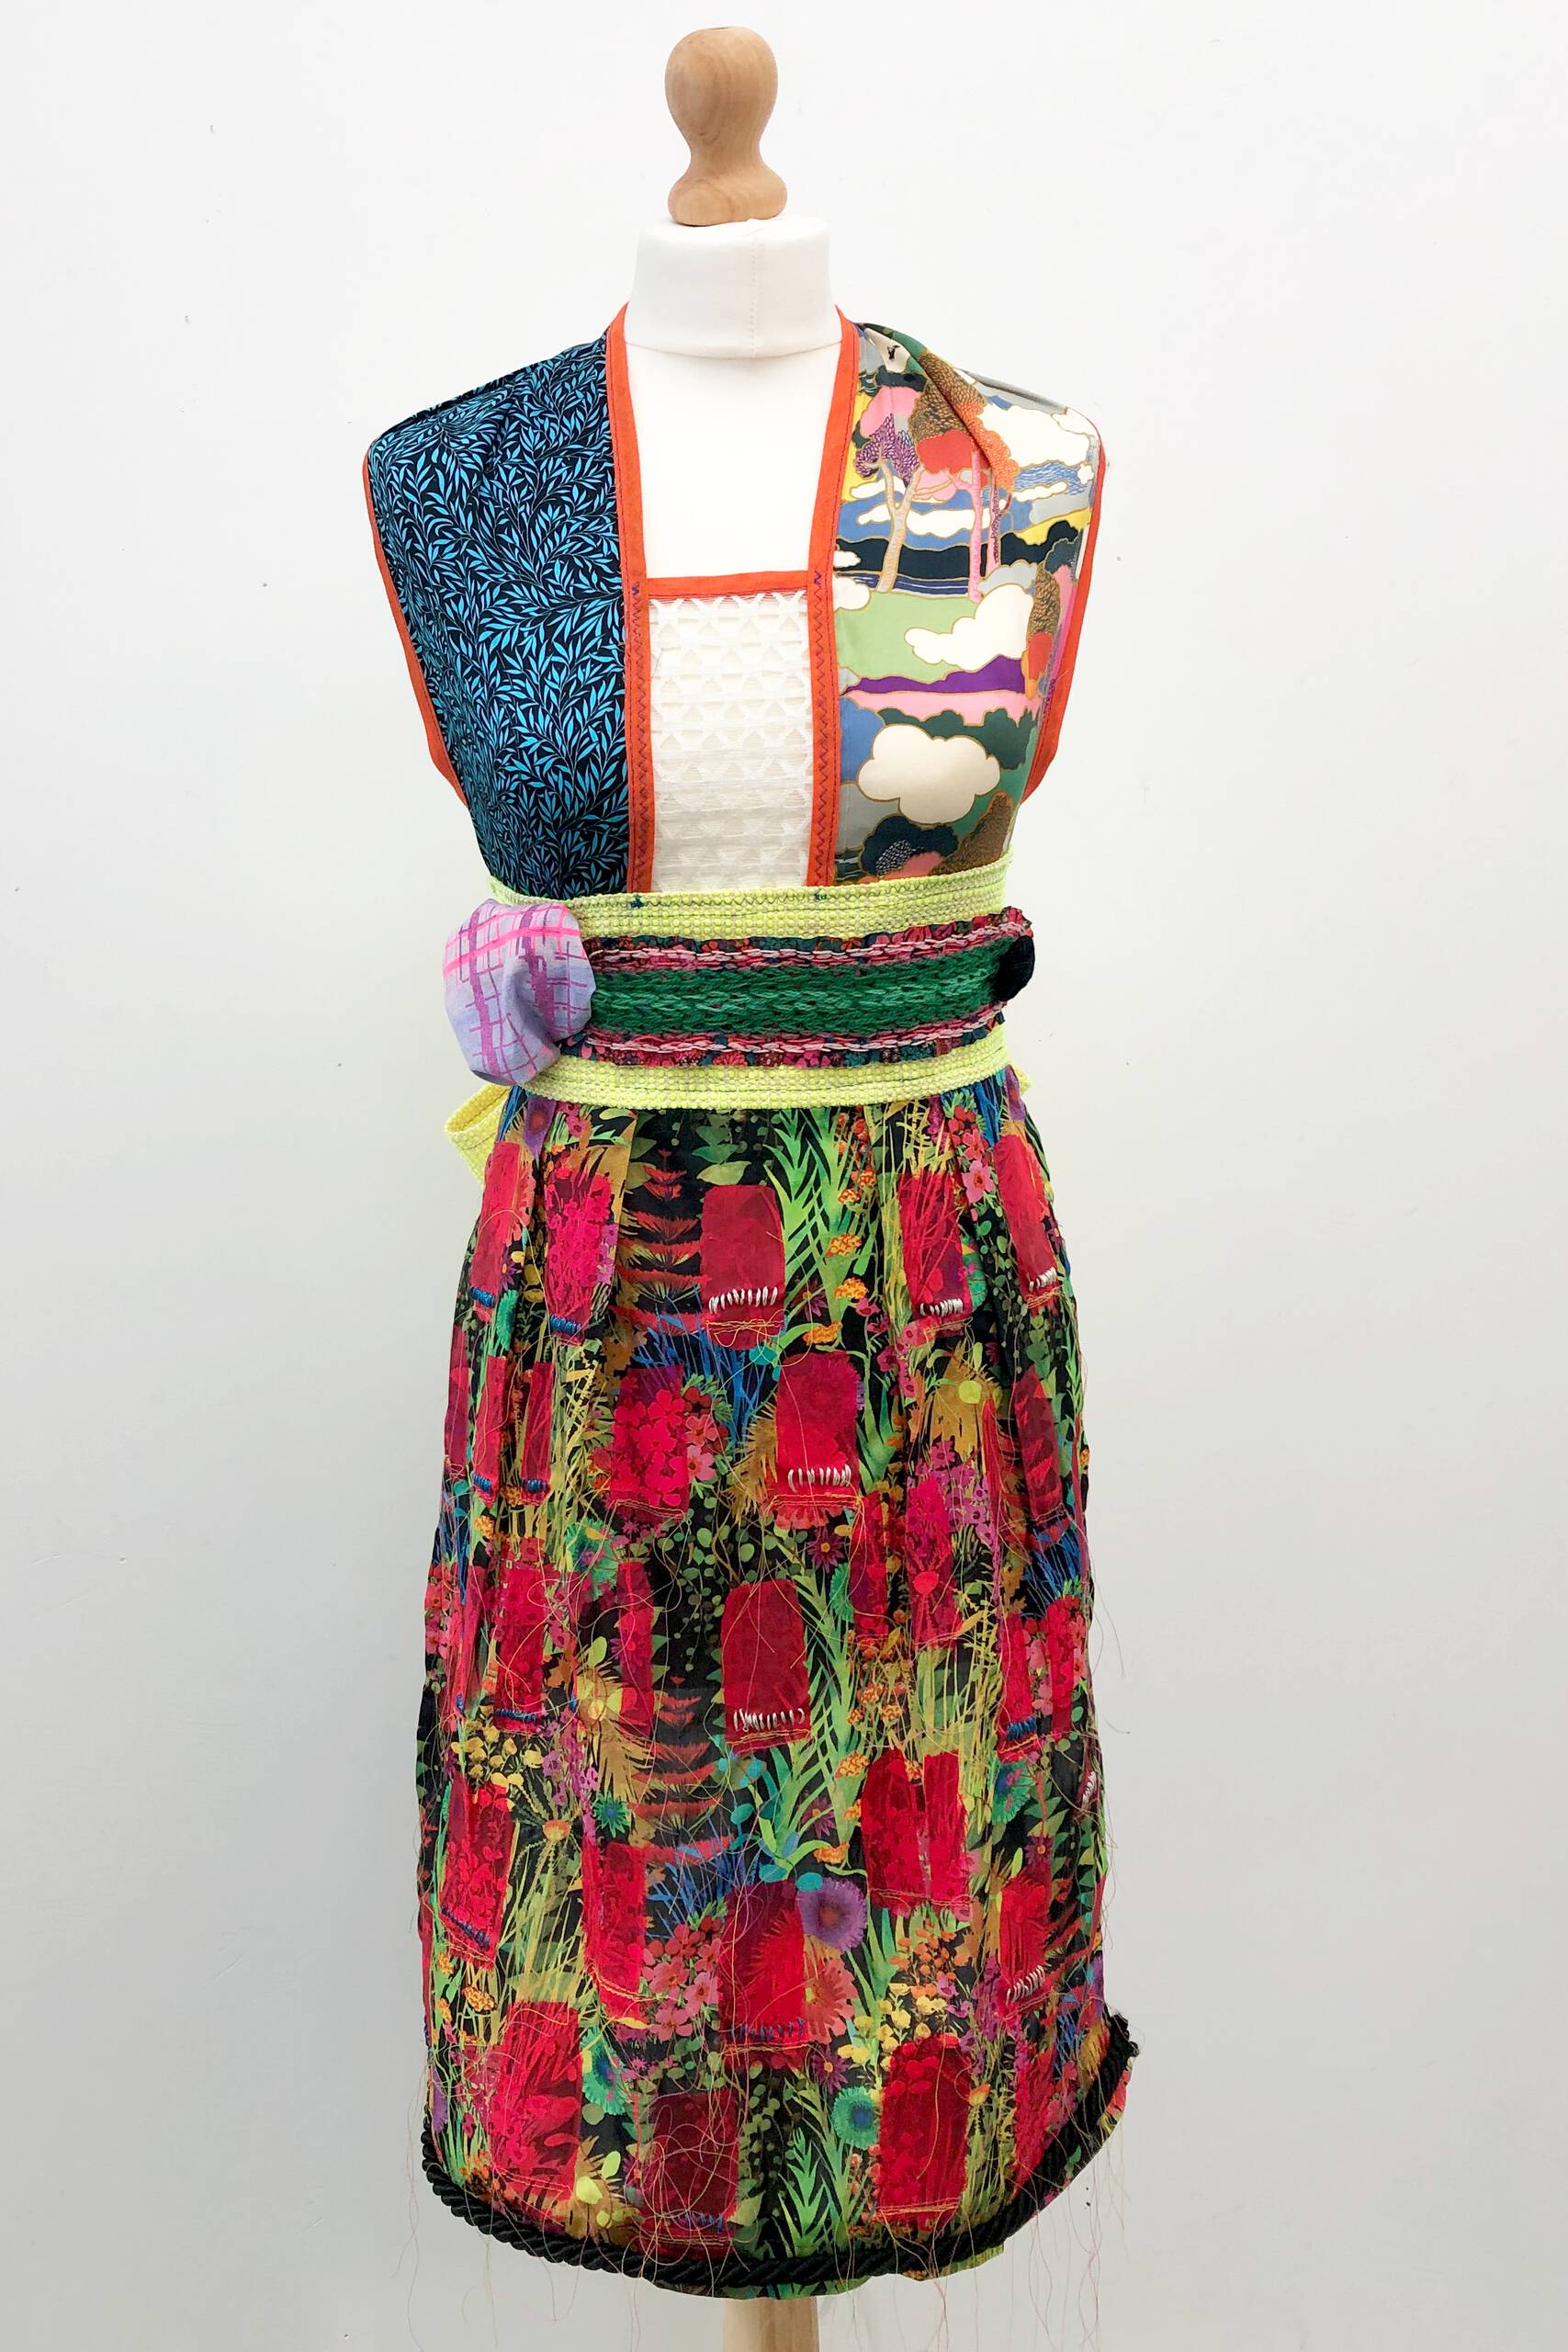 Fruits of Origin [cherinoya] (collaboration with Goia Mujalli), Fabric, acrylic paint, hand-embroidery on hand-sewn garment, 2019